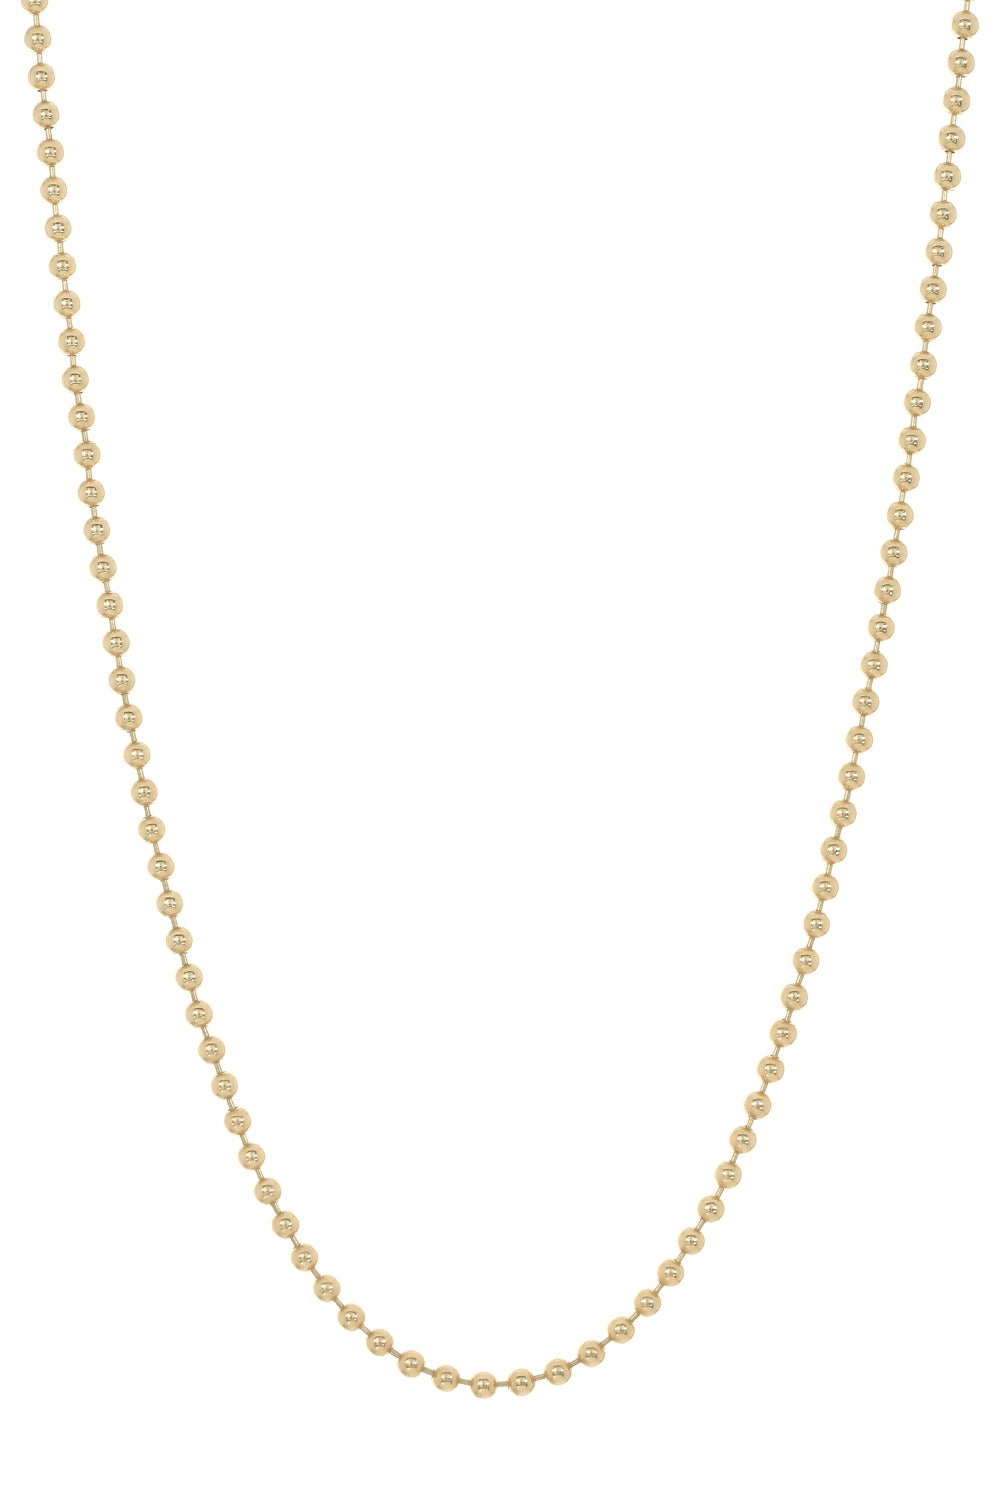 SORELLINA-Ball Chain Necklace-YELLOW GOLD